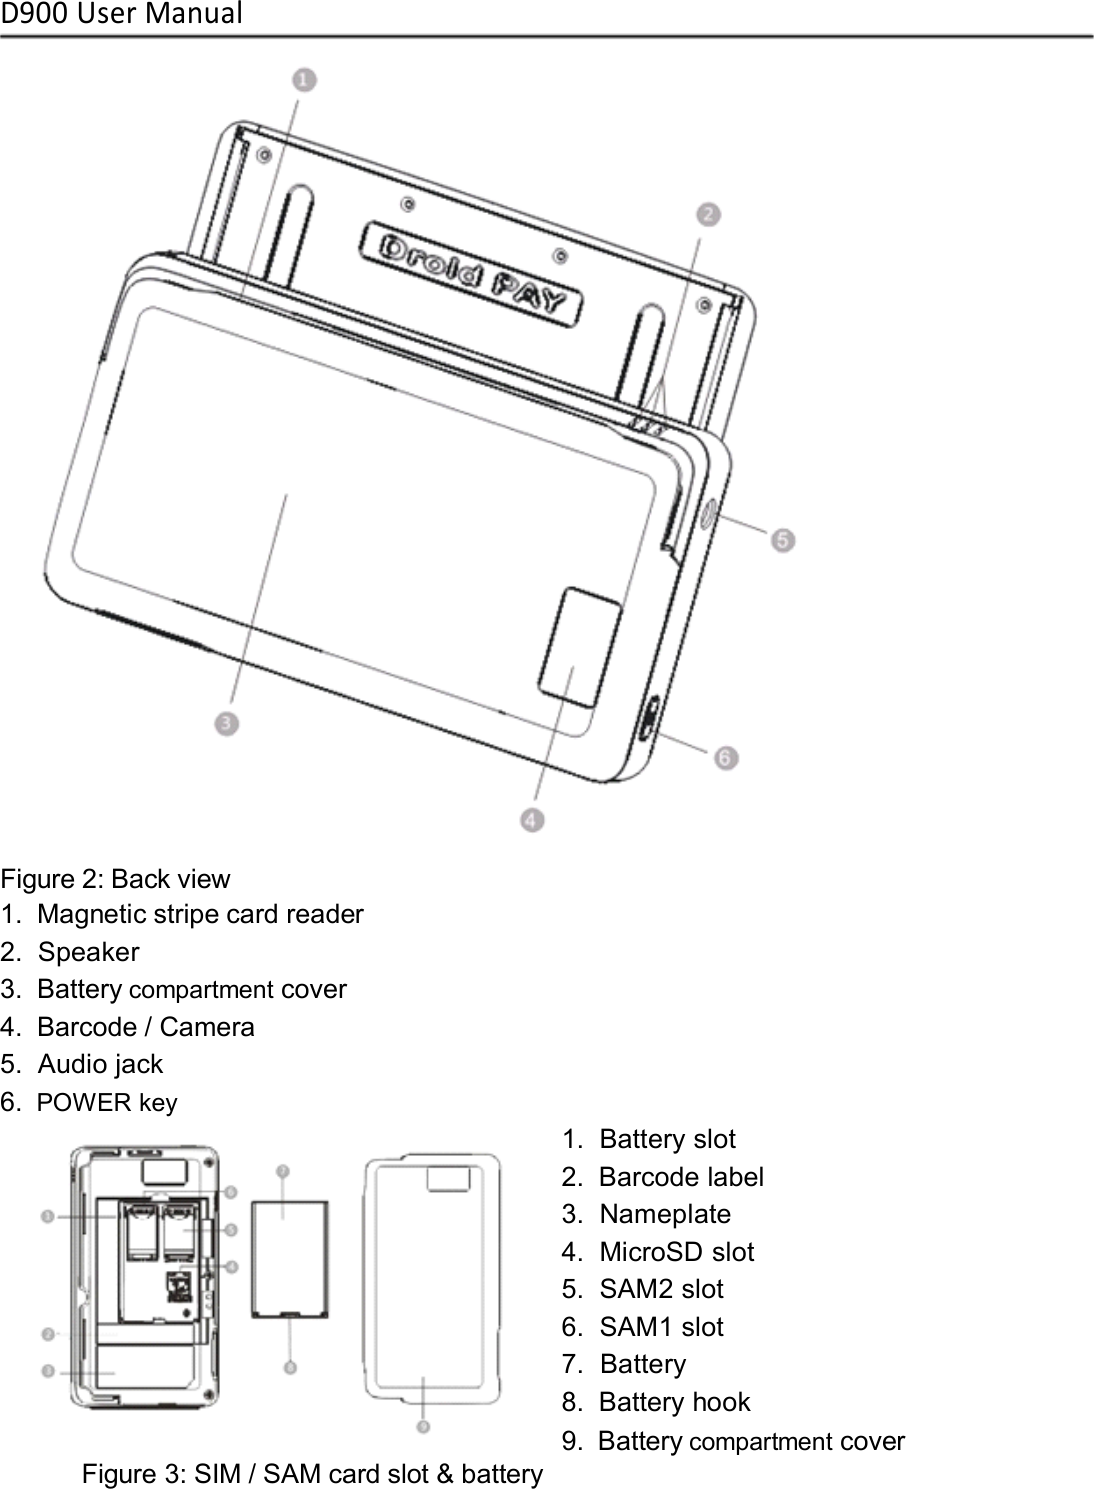 D900 User ManualFigure 2: Back view1. Magnetic stripe card reader2. Speaker3. Battery compartment cover4. Barcode / Camera5. Audio jack6. POWER key1. Battery slot2. Barcode label3. Nameplate4. MicroSD slot5. SAM2 slot6. SAM1 slot7. Battery8. Battery hook9. Battery compartment coverFigure 3: SIM / SAM card slot &amp; battery